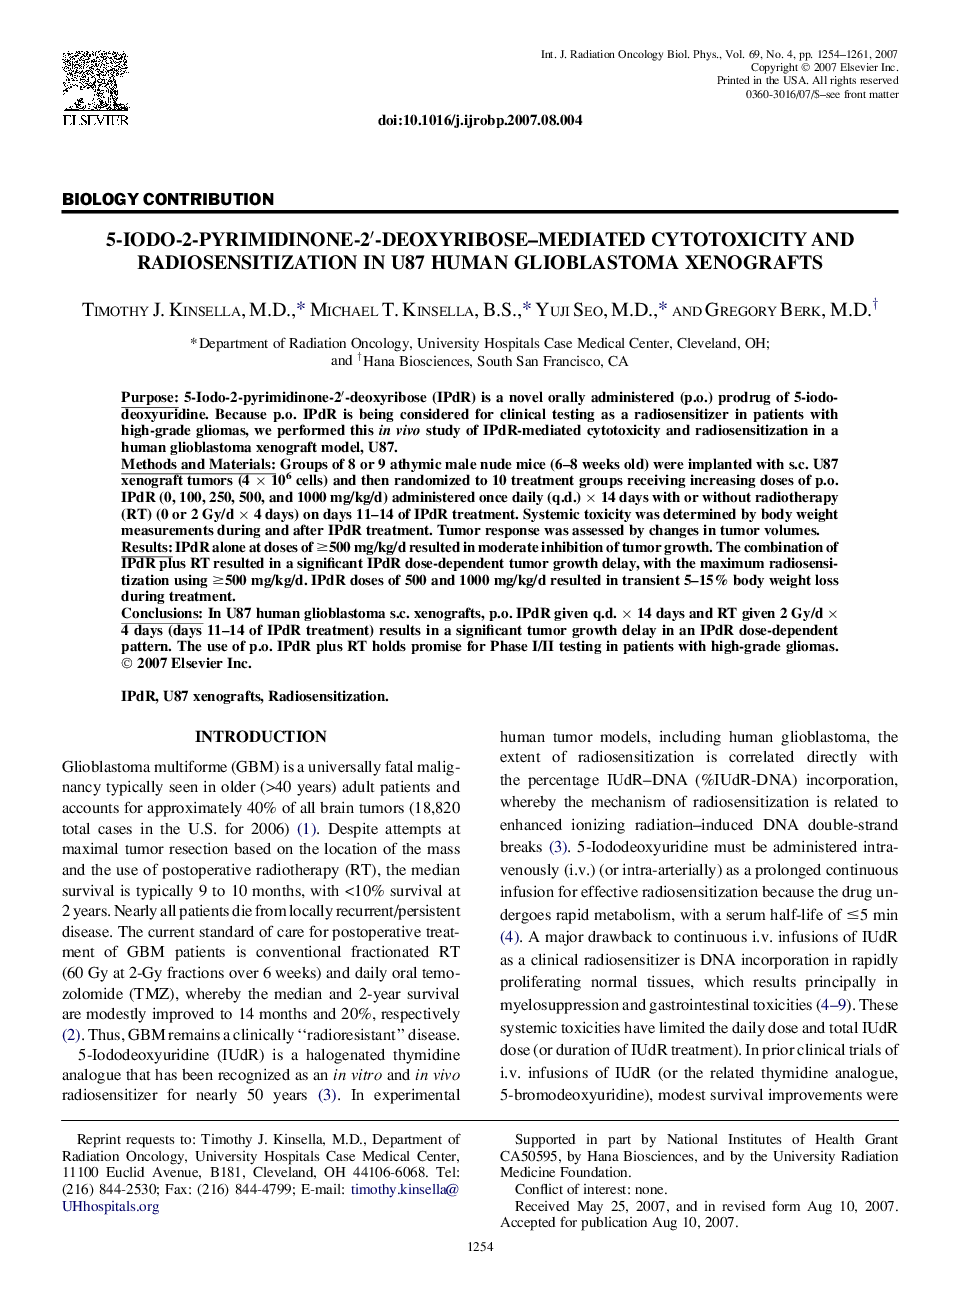 5-Iodo-2-Pyrimidinone-2â²-Deoxyribose-Mediated Cytotoxicity and Radiosensitization in U87 Human Glioblastoma Xenografts